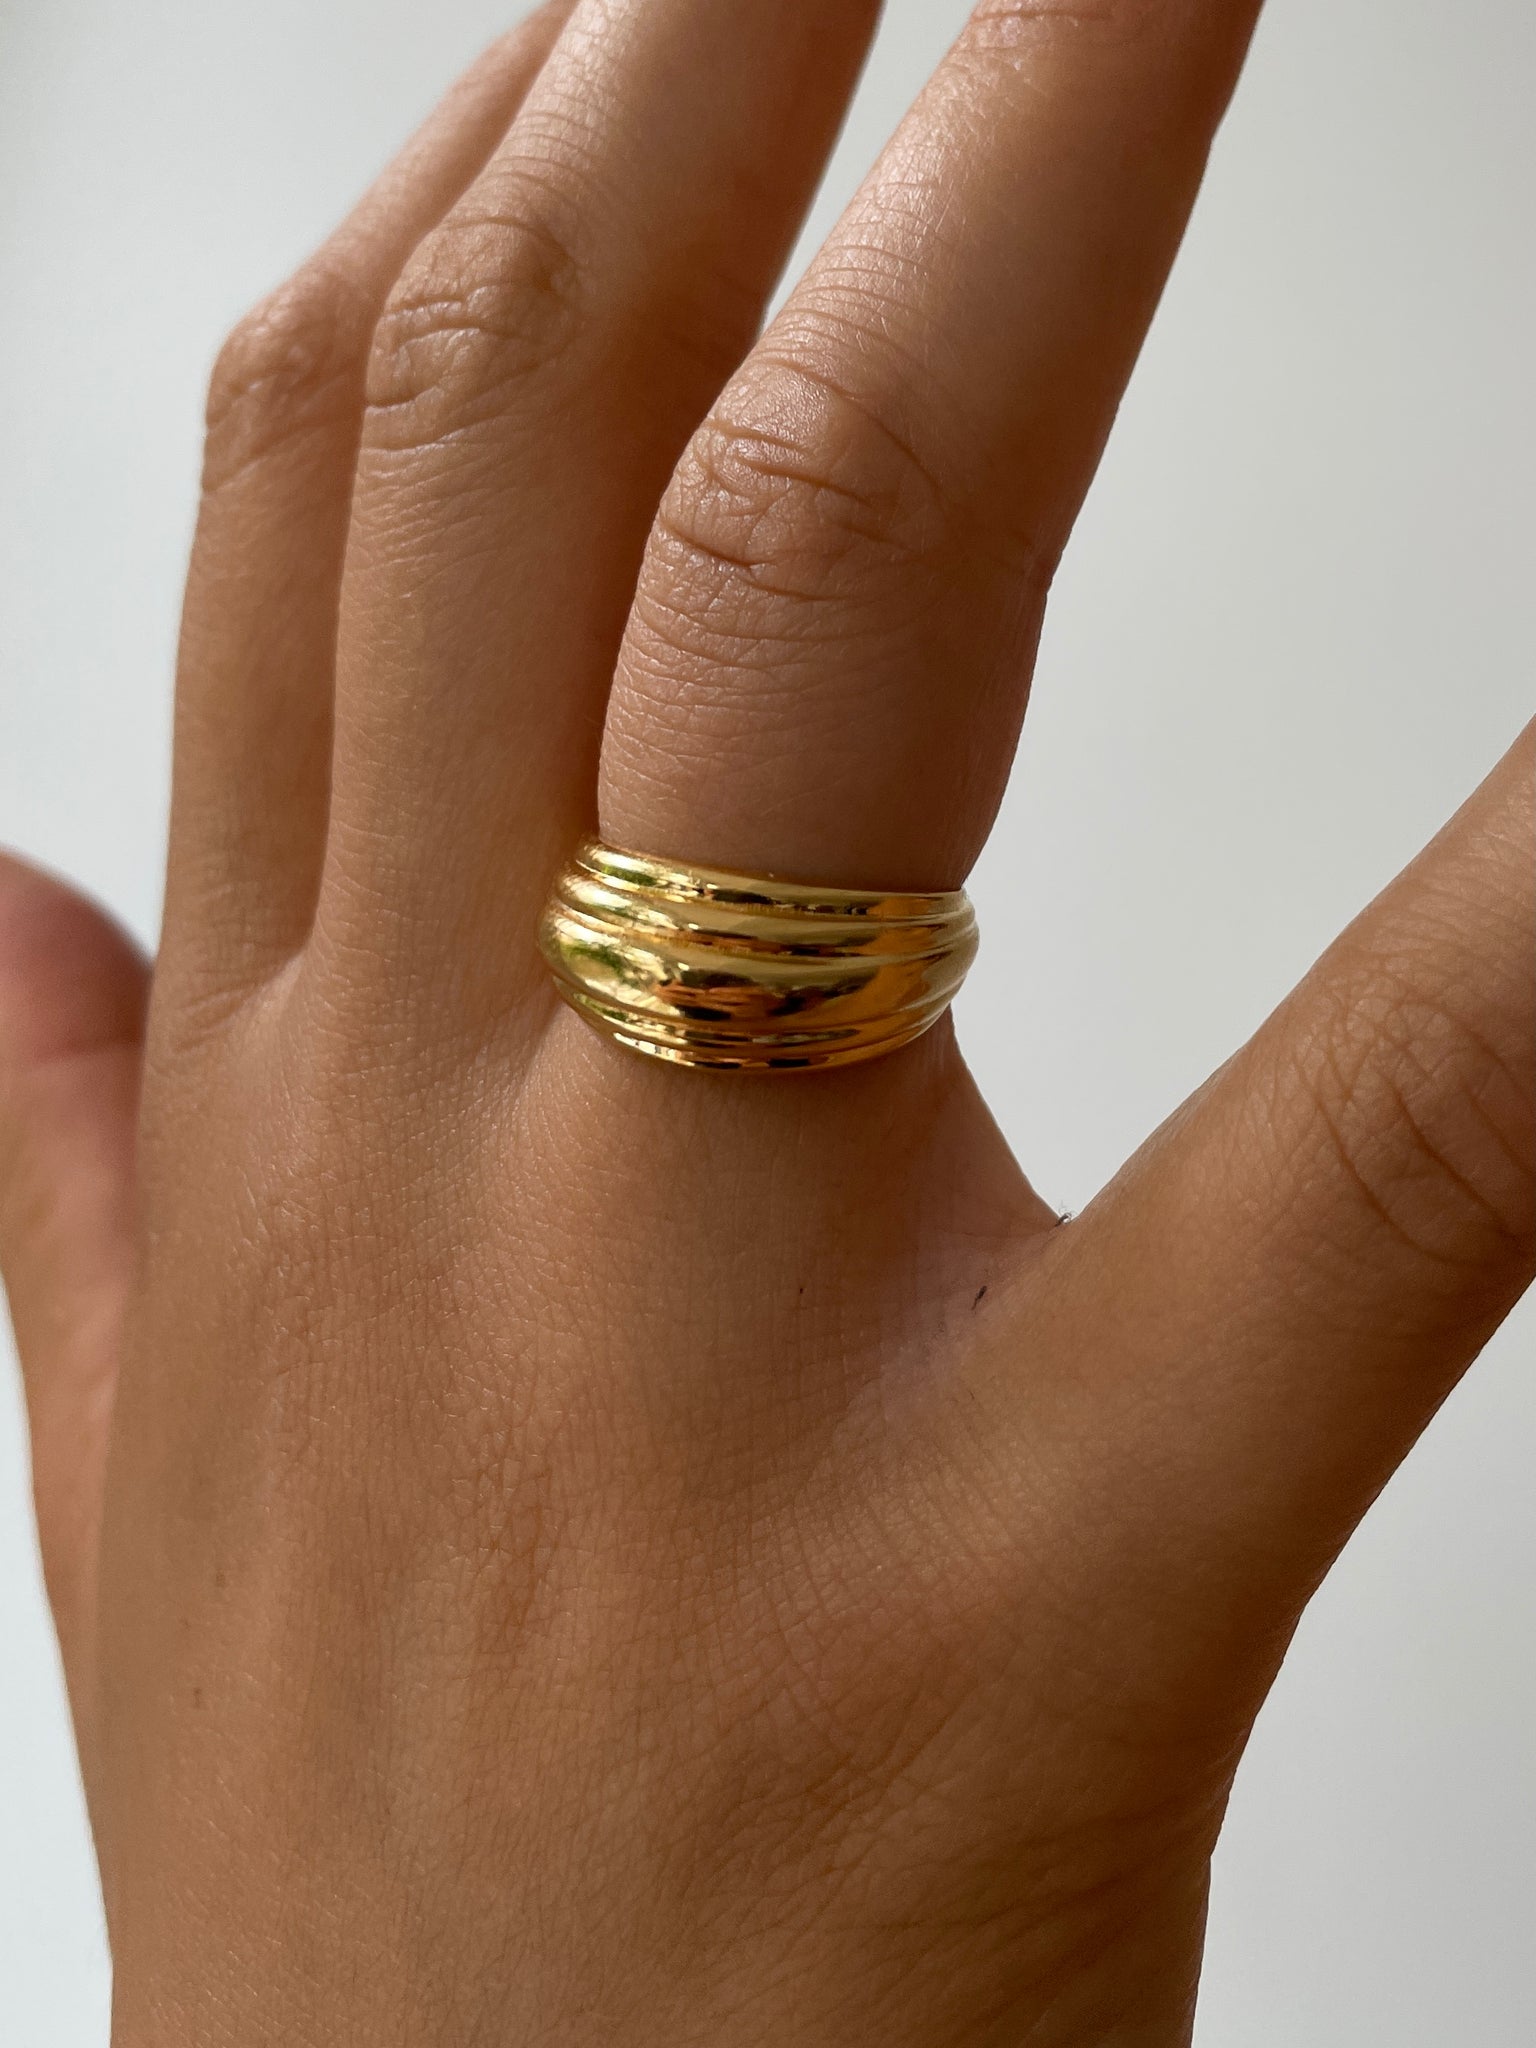 Blondeau Pinky Ring, 18K Gold Vermeil